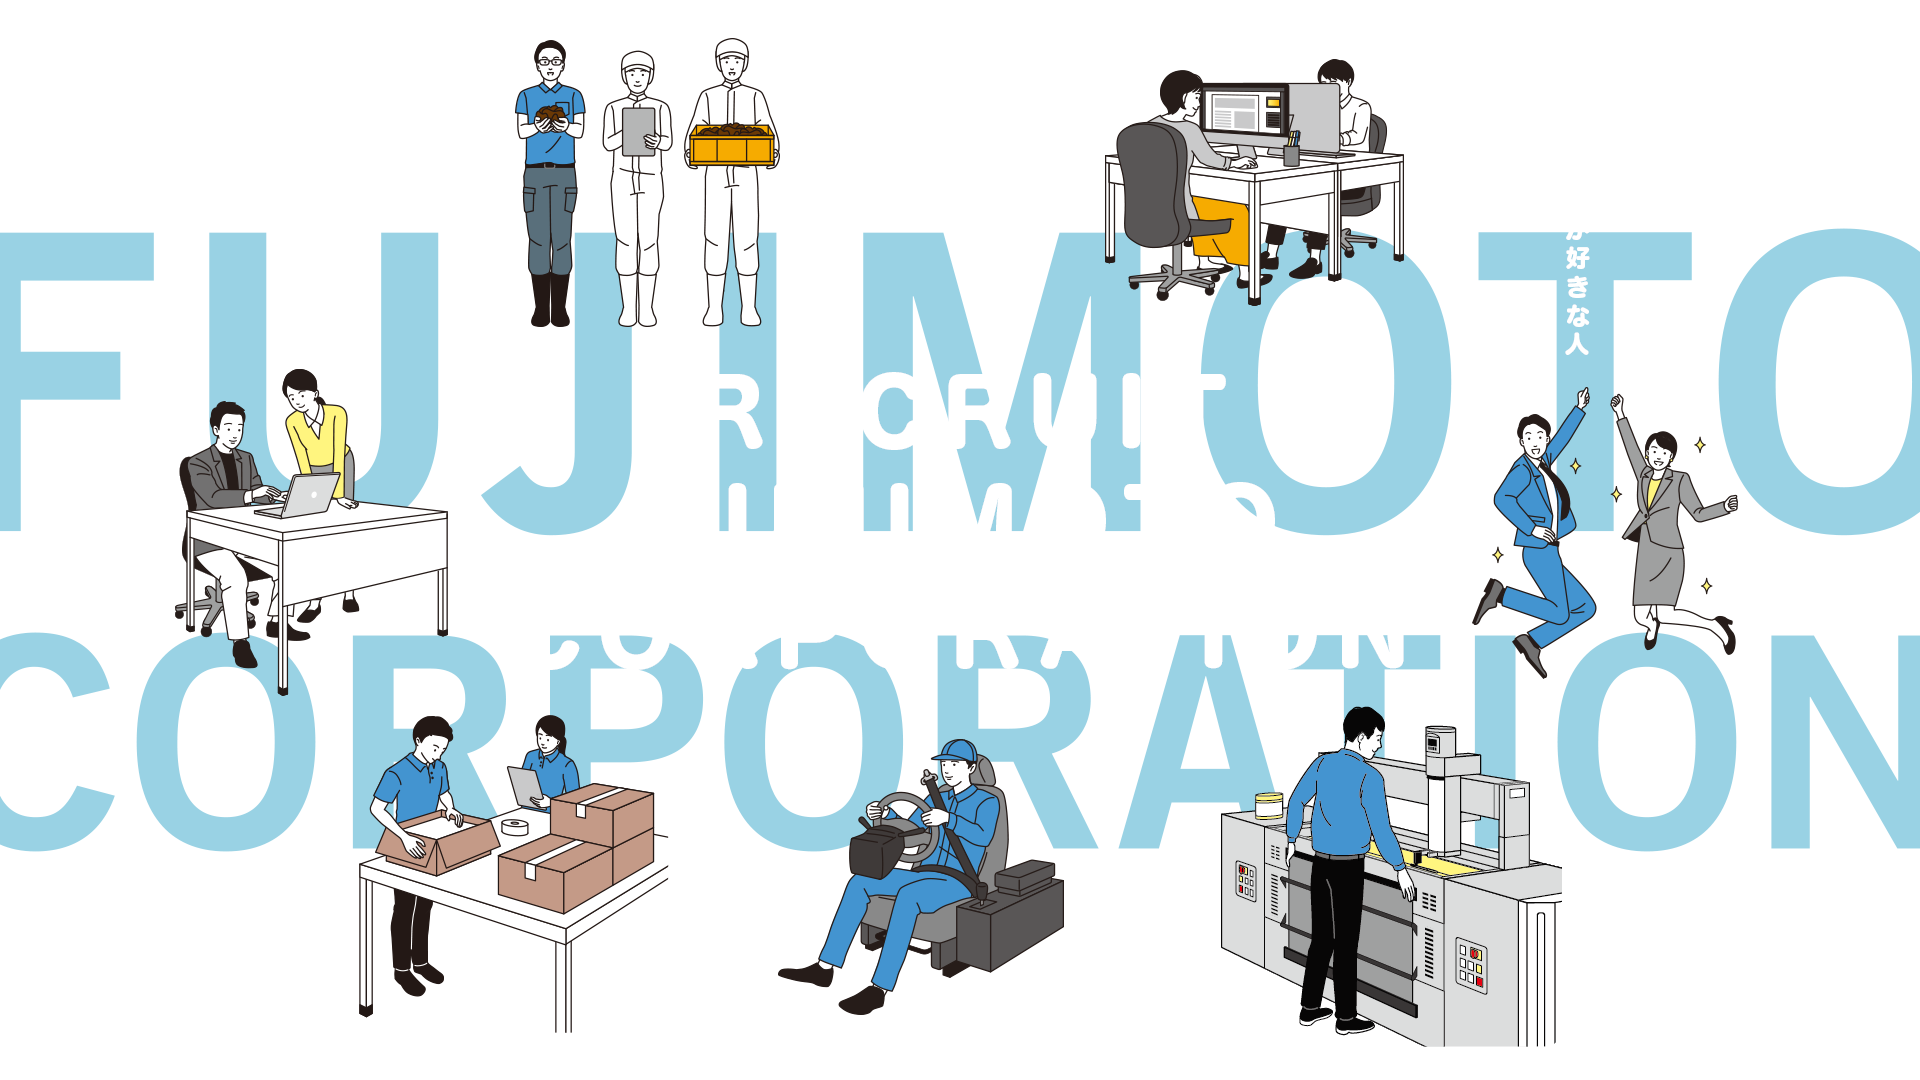 RECRUIT FUJIMOTO CORPORATION